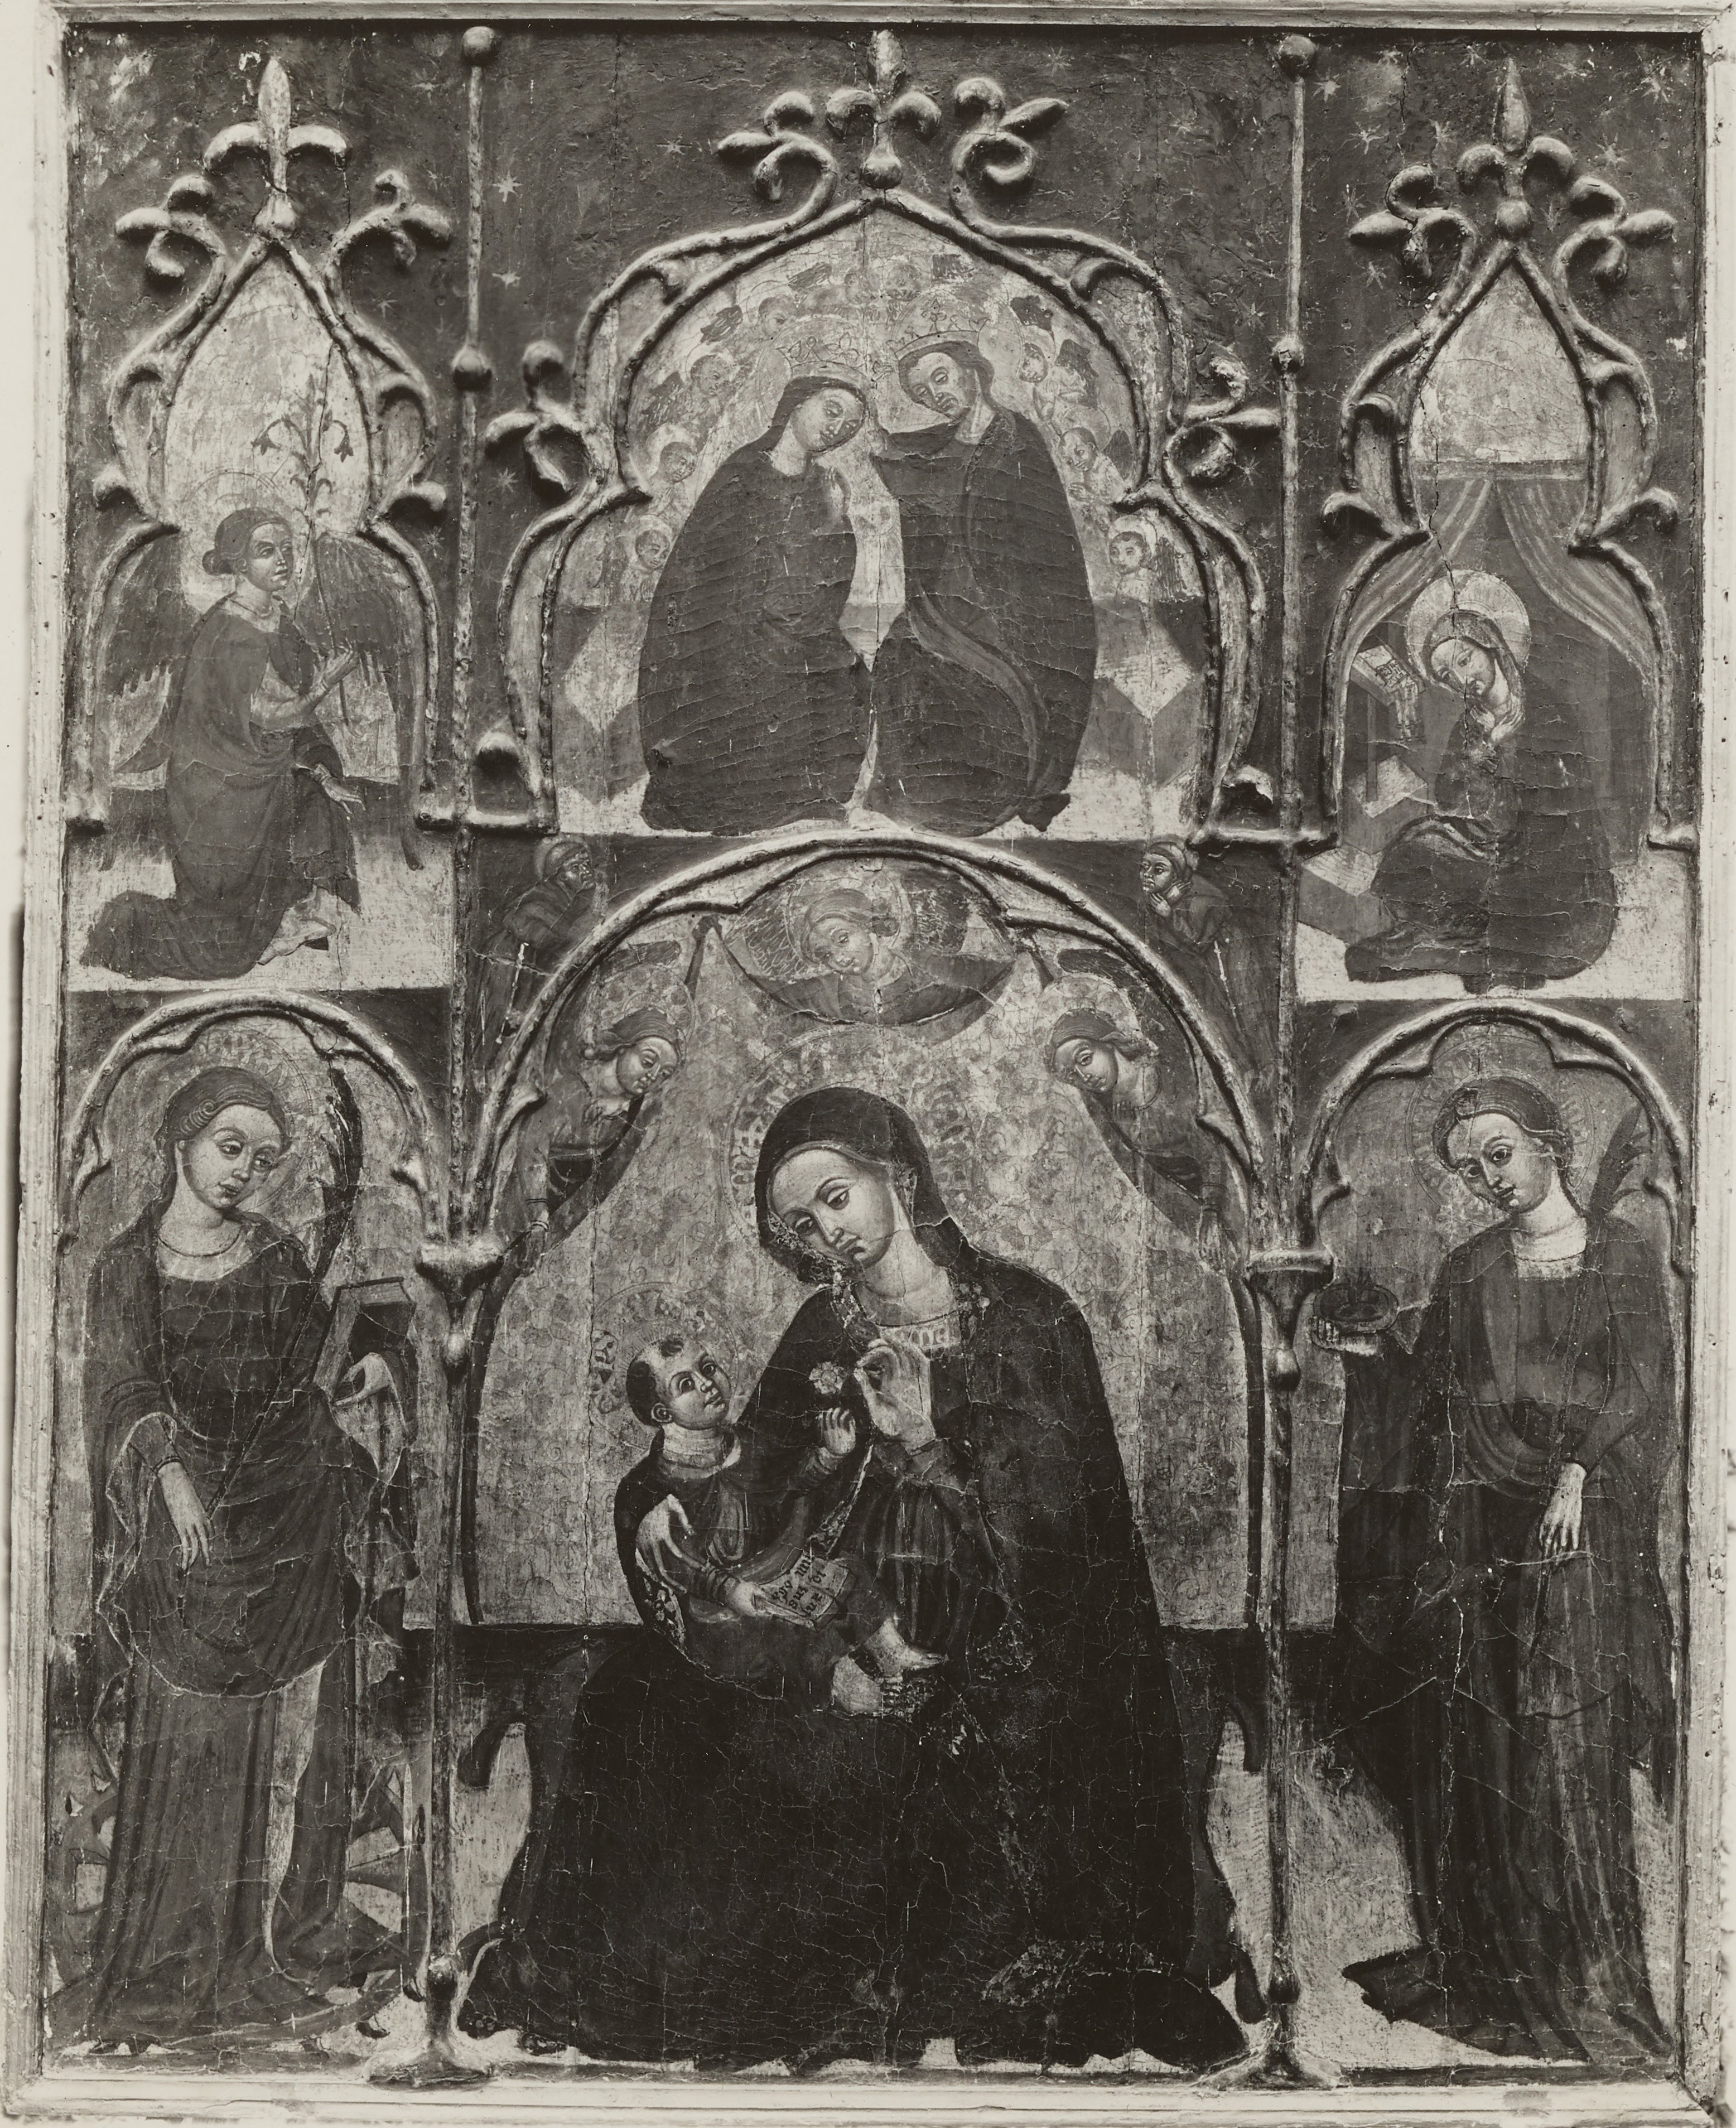 Di Natale, G., Cosenza - Chiesa di S. Francesco d'Assisi, sacrestia, polittico, 1926-1950, gelatina ai sali d'argento, MPI156185